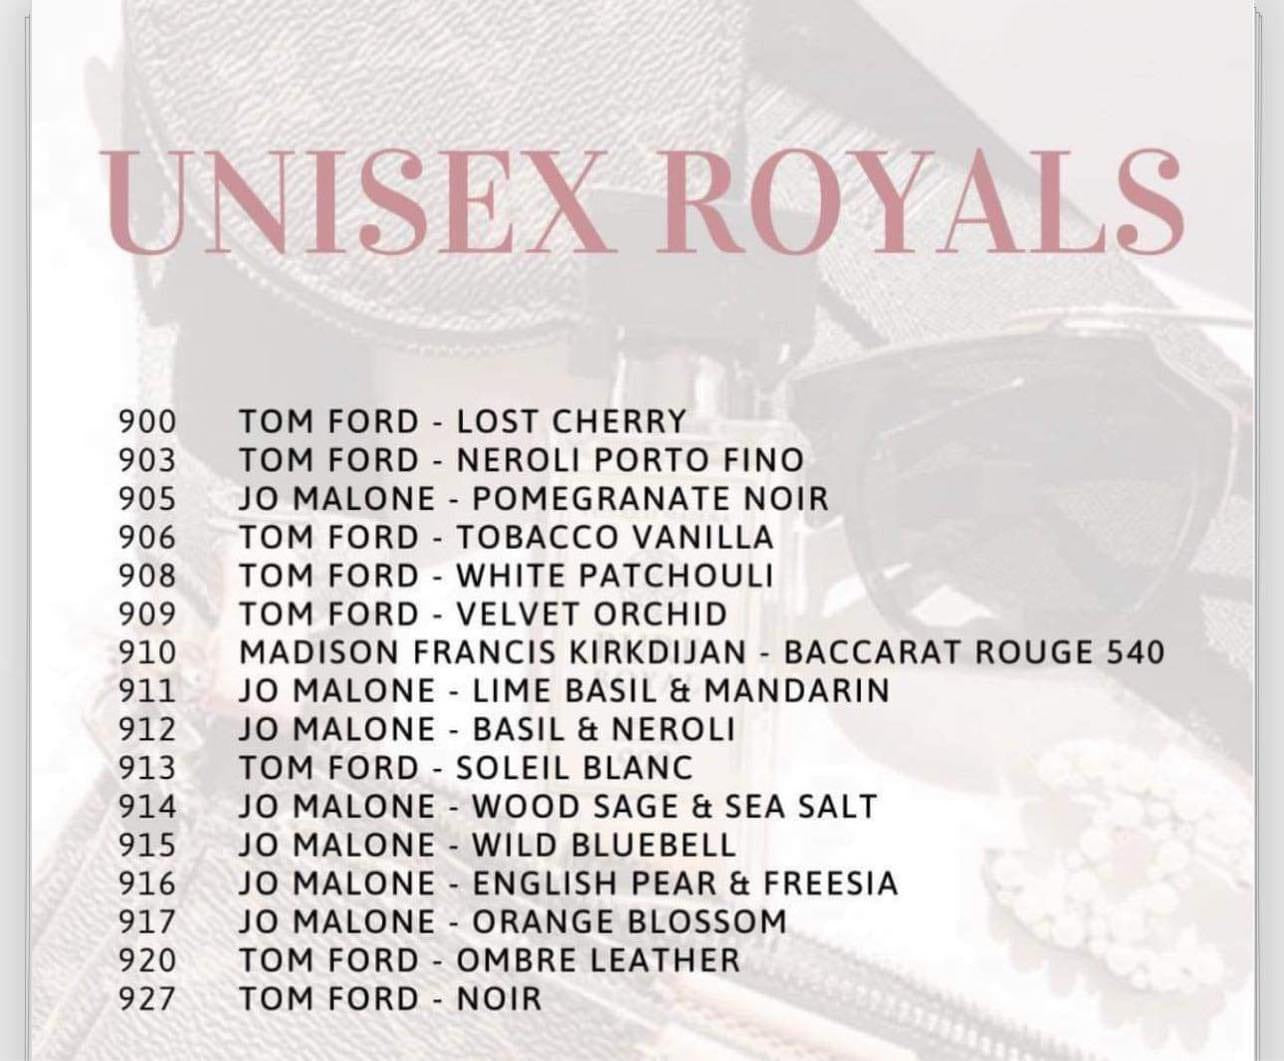 Royals Collection Unisex - Full List (PREORDER - ETA 2 WEEKS)